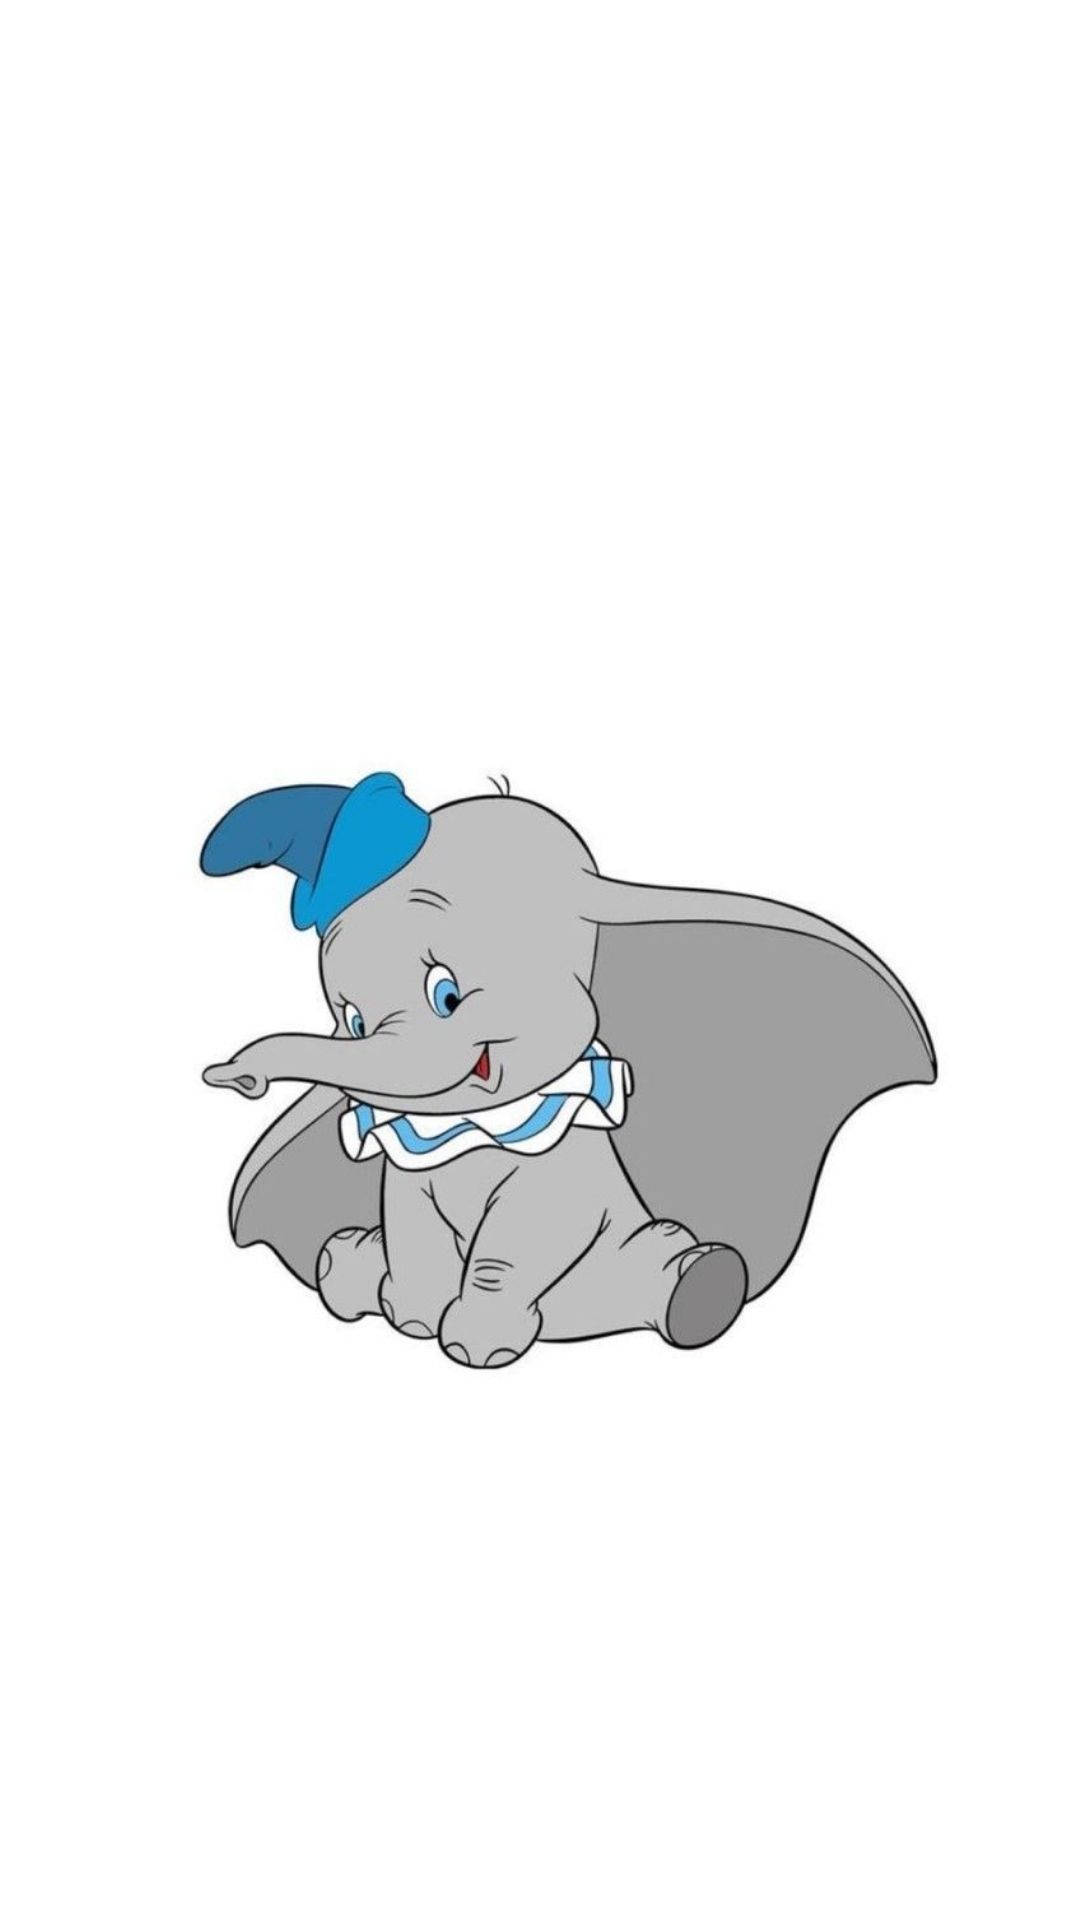 Top 999+ Dumbo Wallpaper Full HD, 4K✅Free to Use